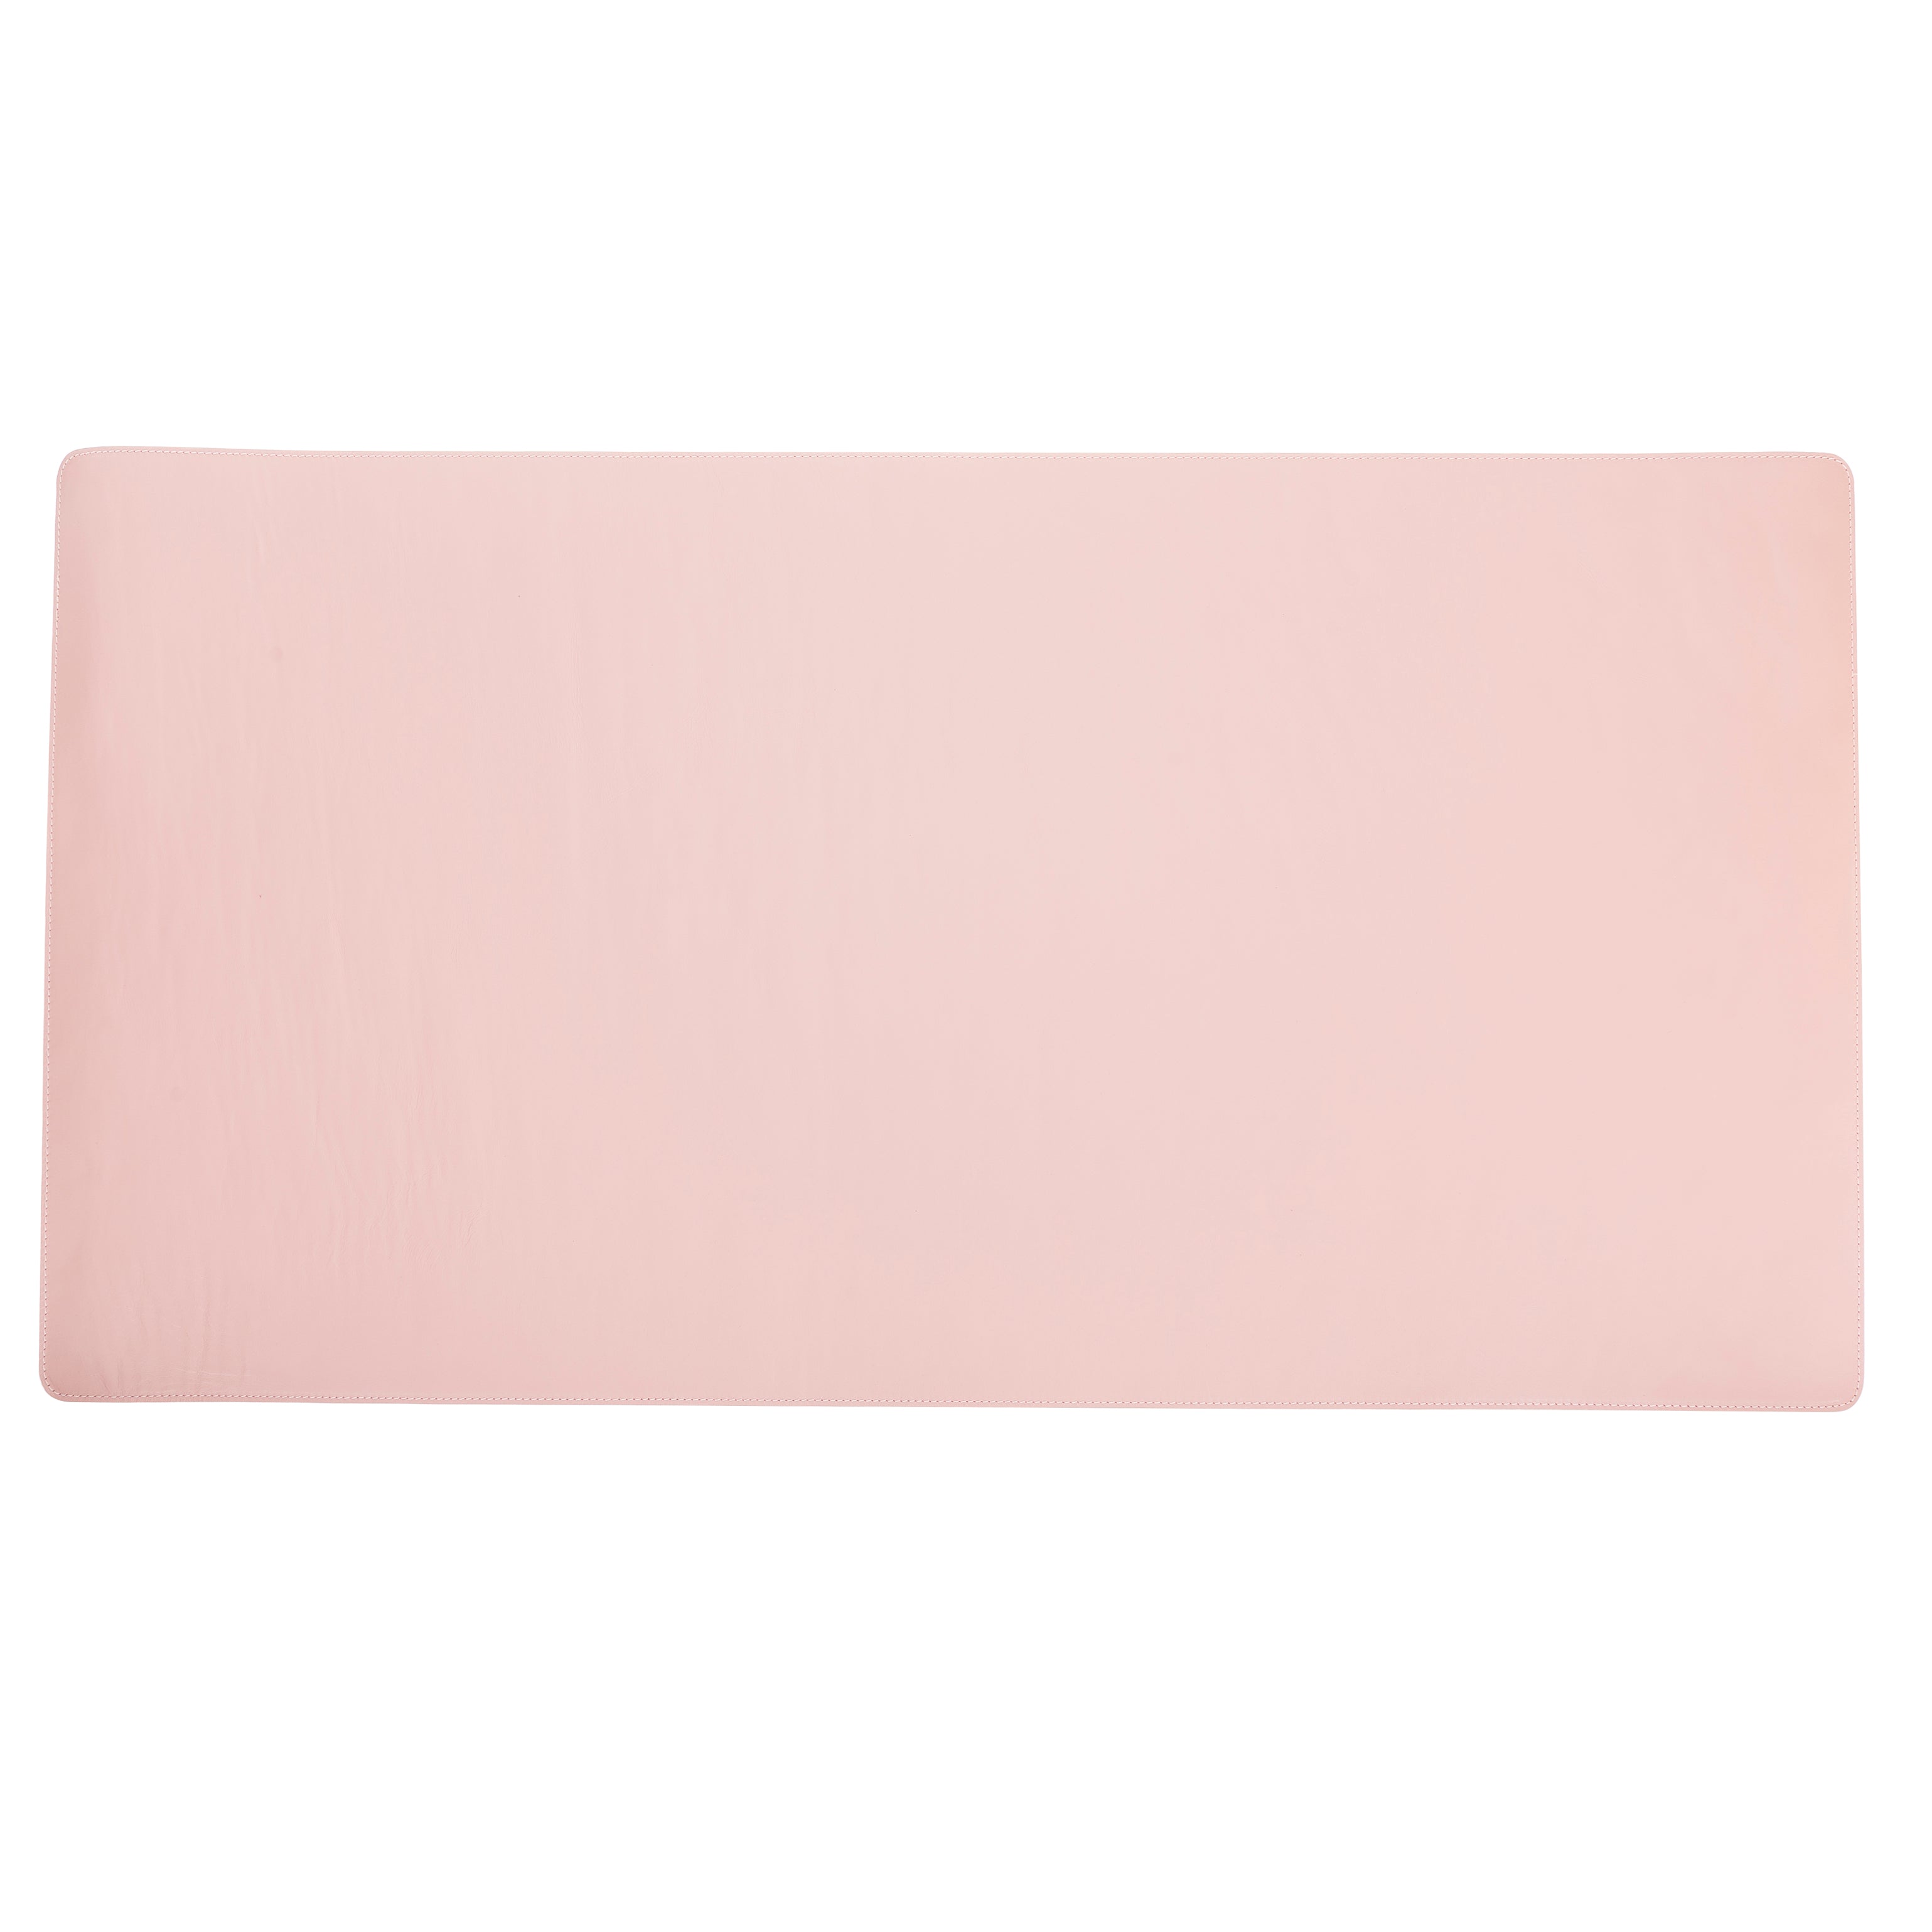 DelfiCase Genuine Leather Deskmat, Computer Pad, Office Desk Pad (Pink Nude) 8